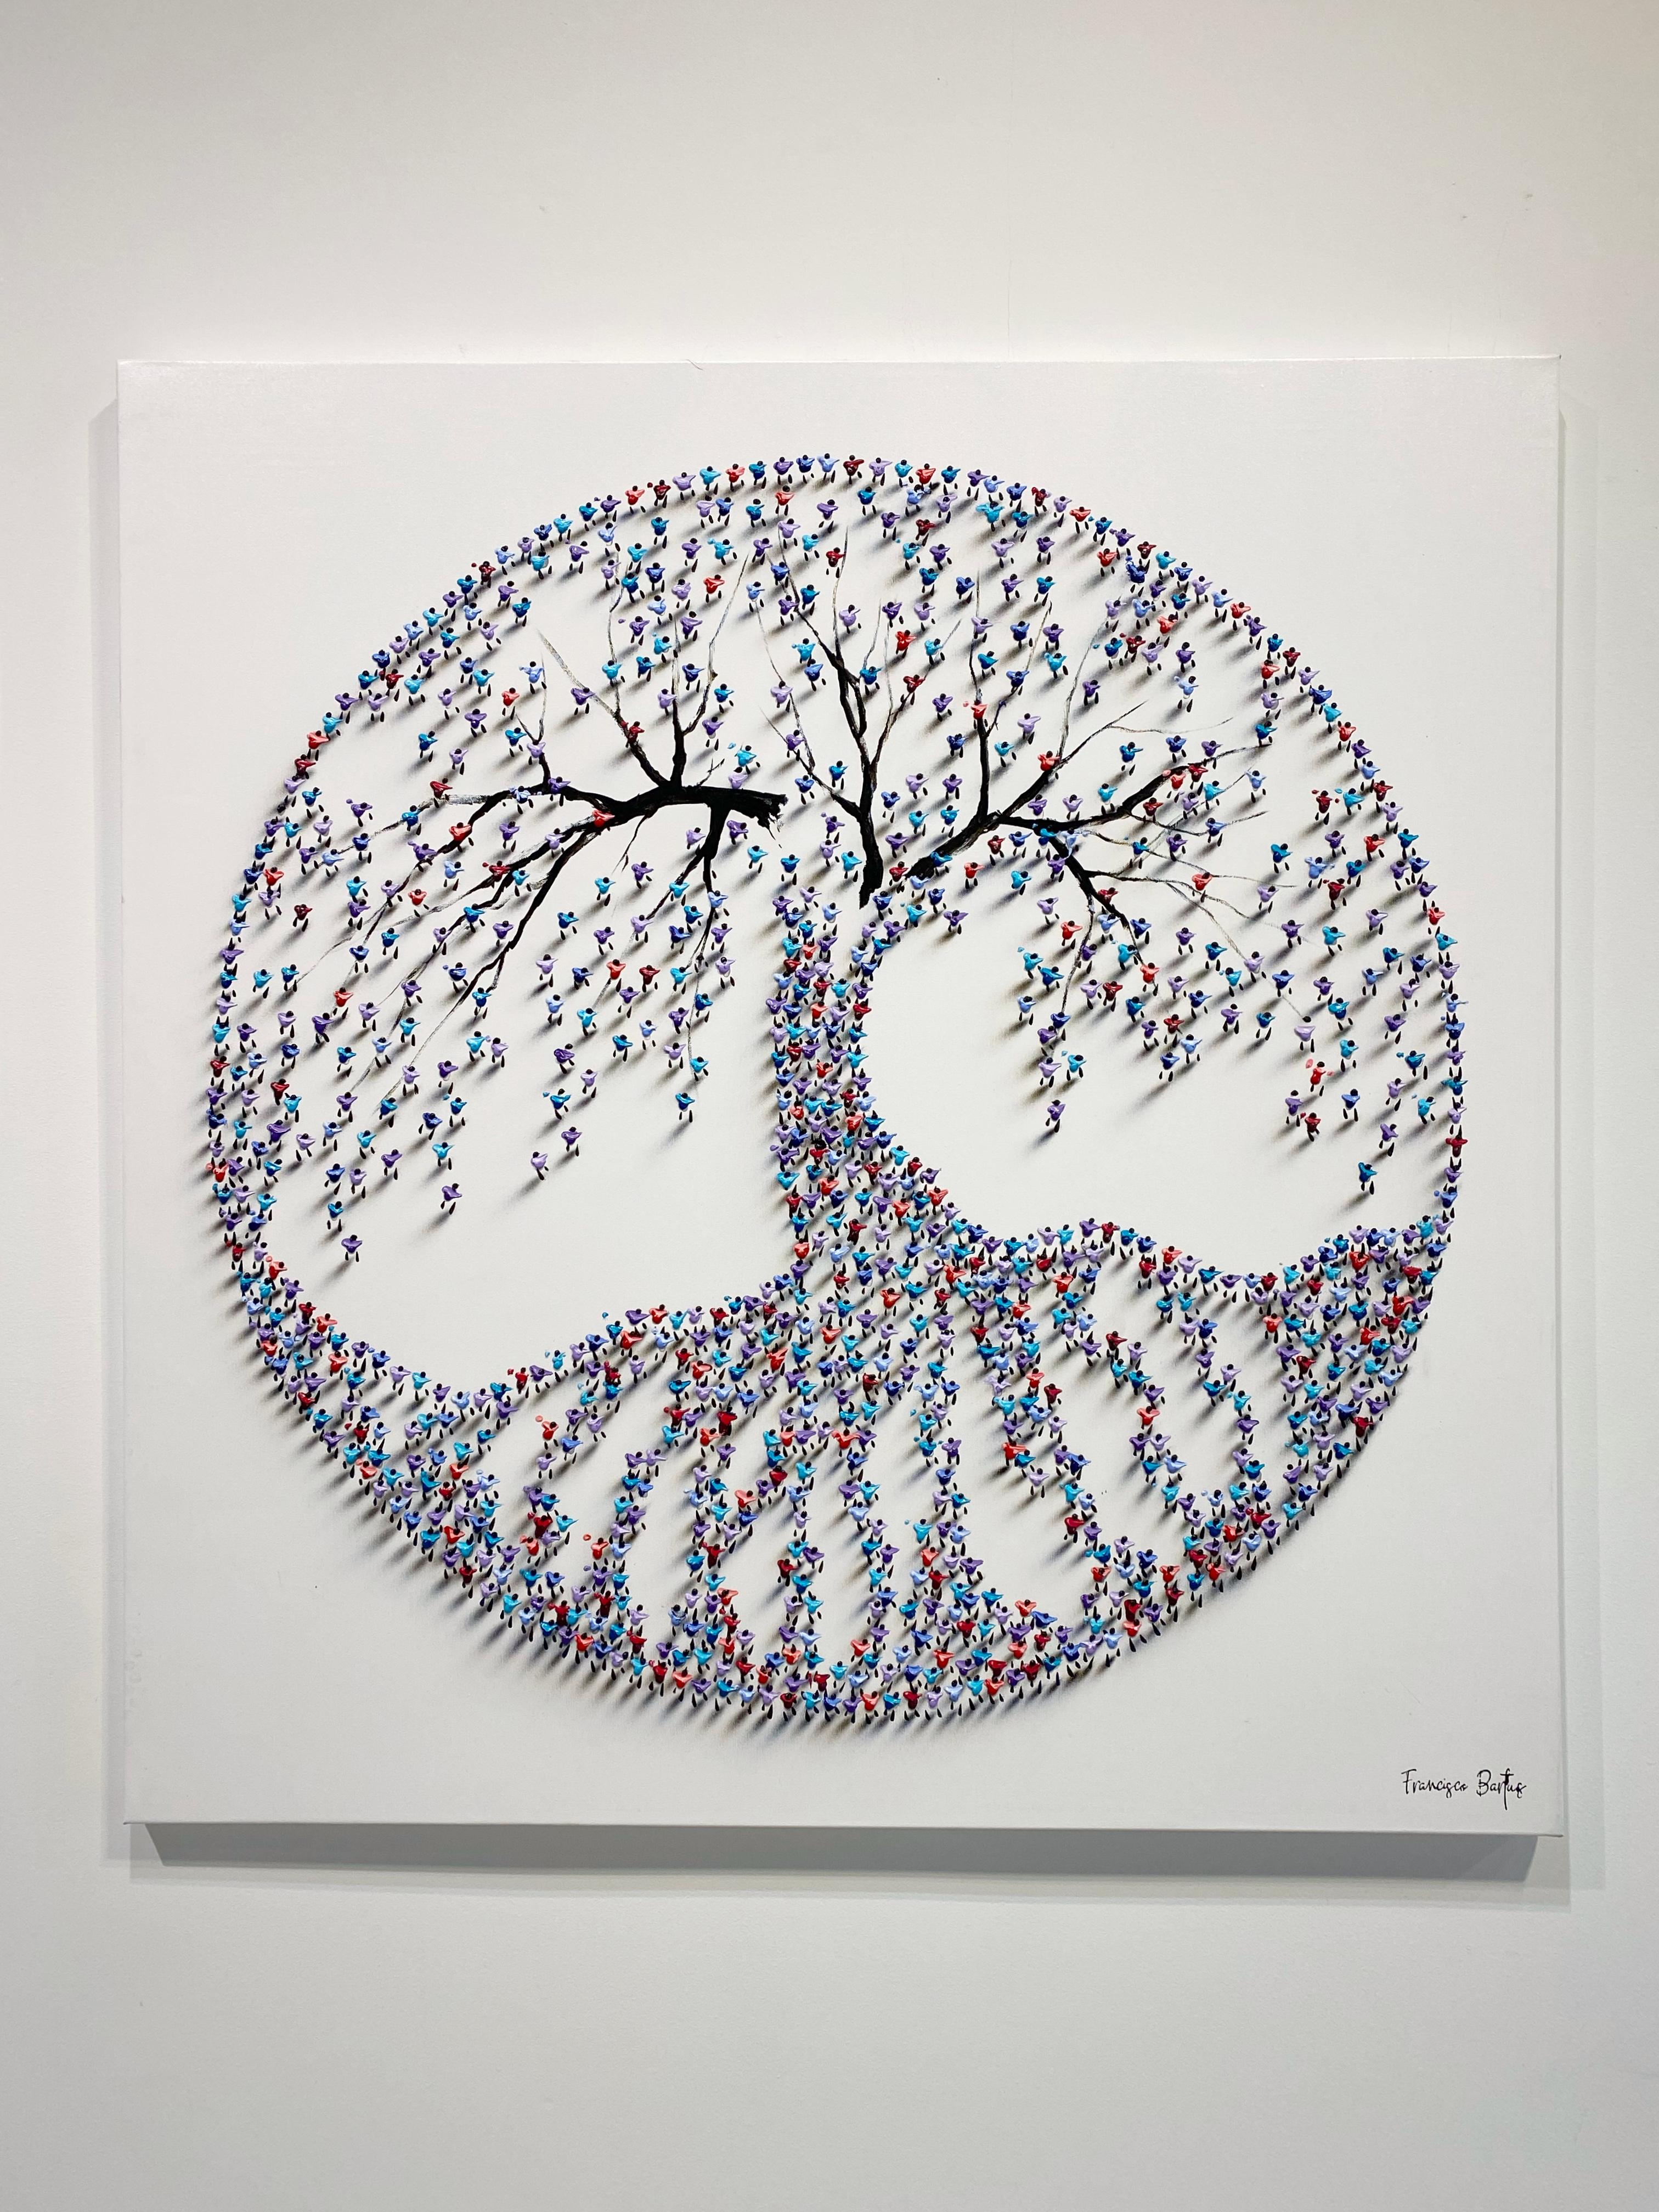 Francisco Bartus Abstract Painting – Baum des Lebens